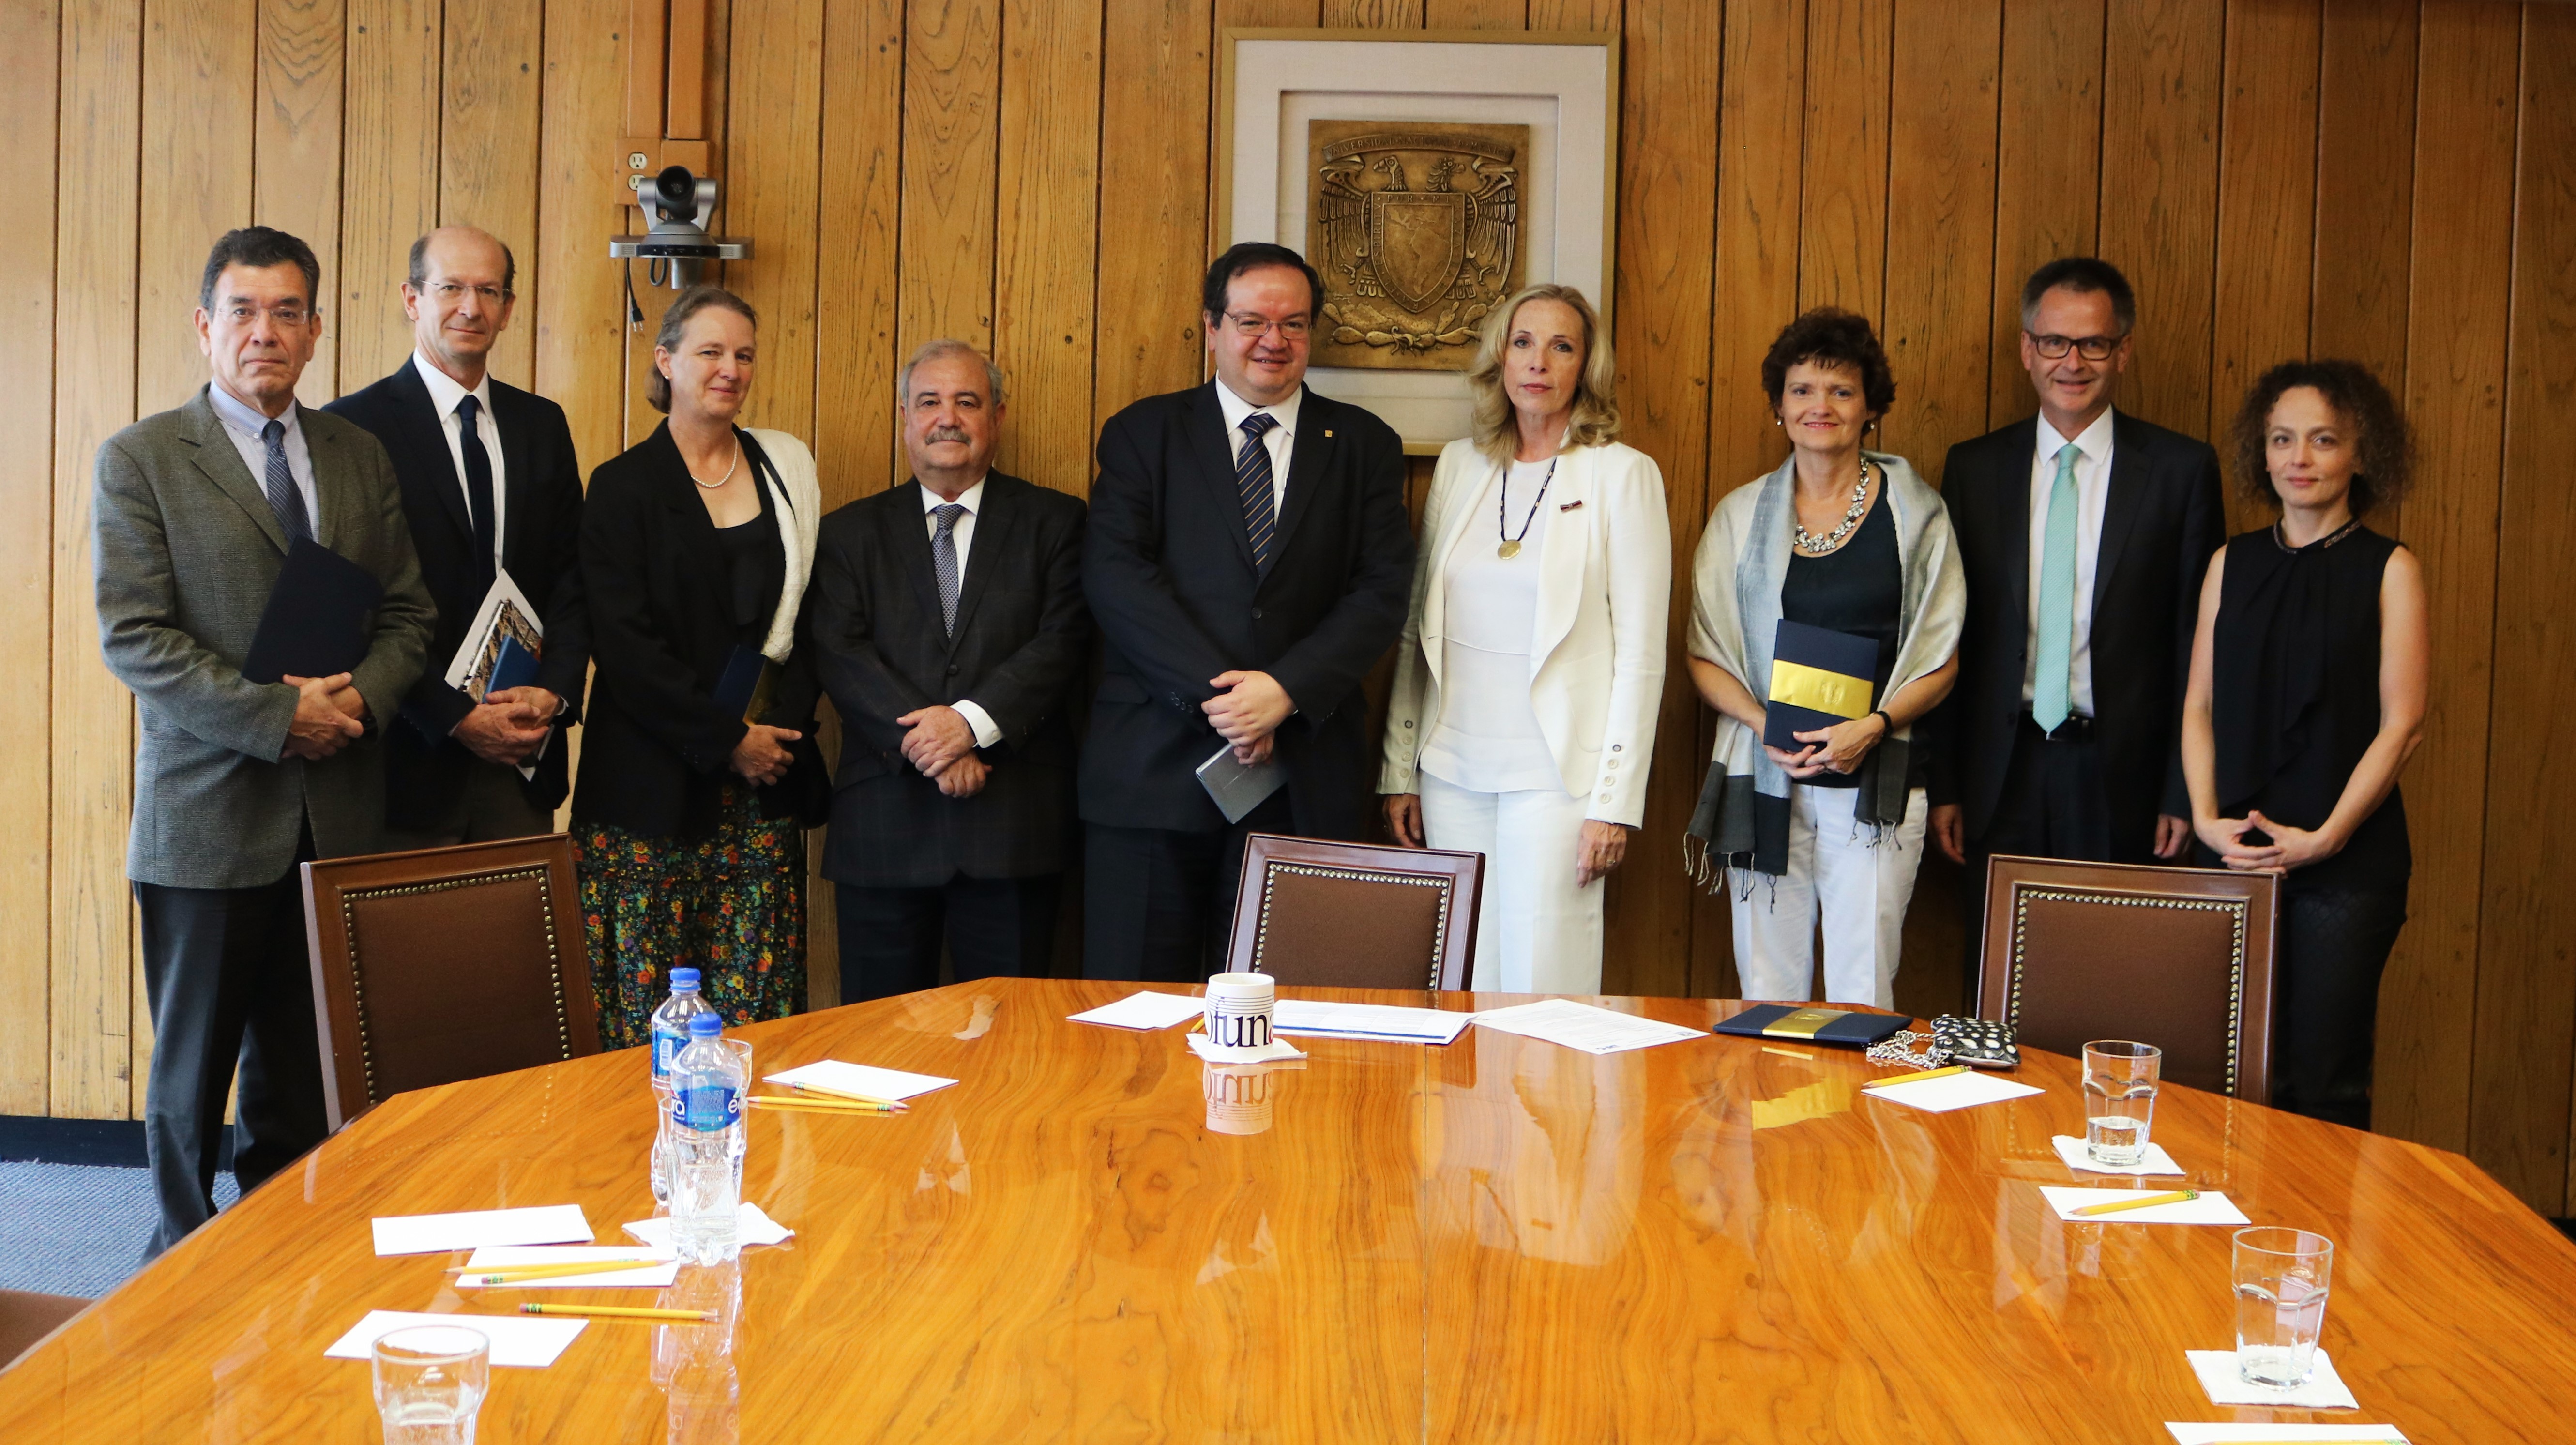 Treffen mit dem Generalsekretär der UNAM, Leonardo Lomelí (v.l.n.r): Christina Siebe, Carlos de la Hoz, Lomelí, Dorothee Dzwonnek, Annette Schmidtmann, Dietrich Halm und Kathrin Winkler